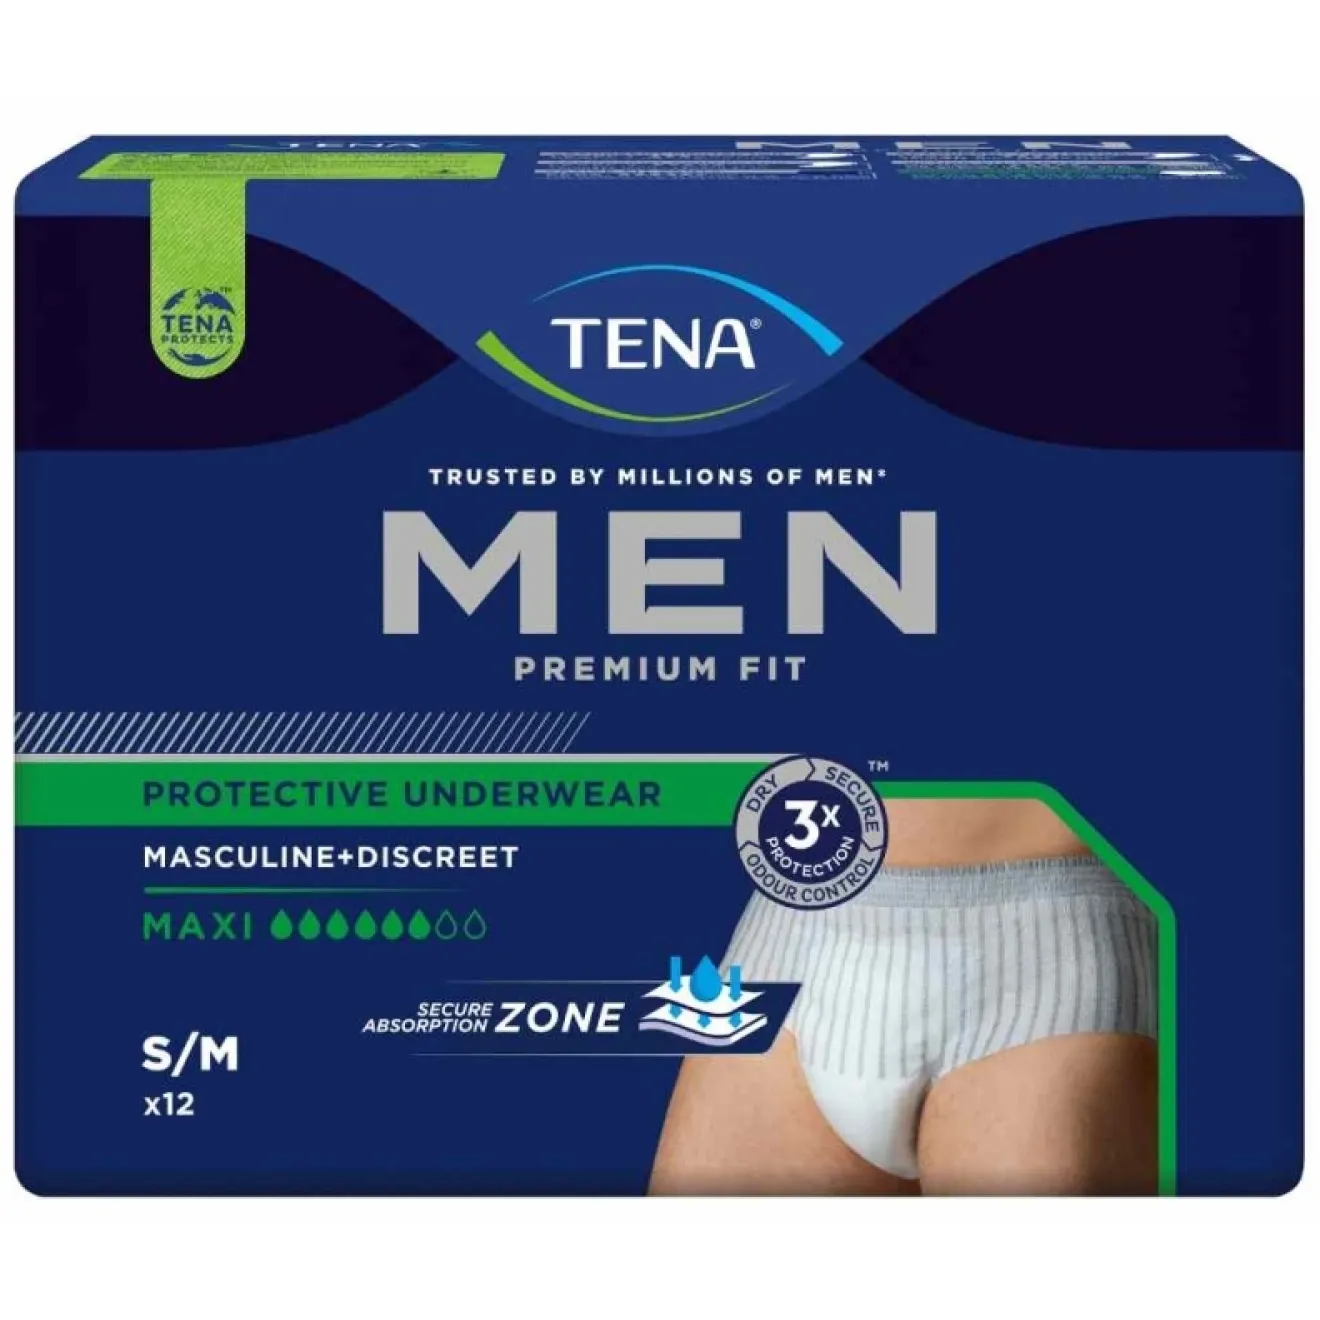 TENA MEN Premium Fit Inkontinenz Pants maxi S/M 12 ST